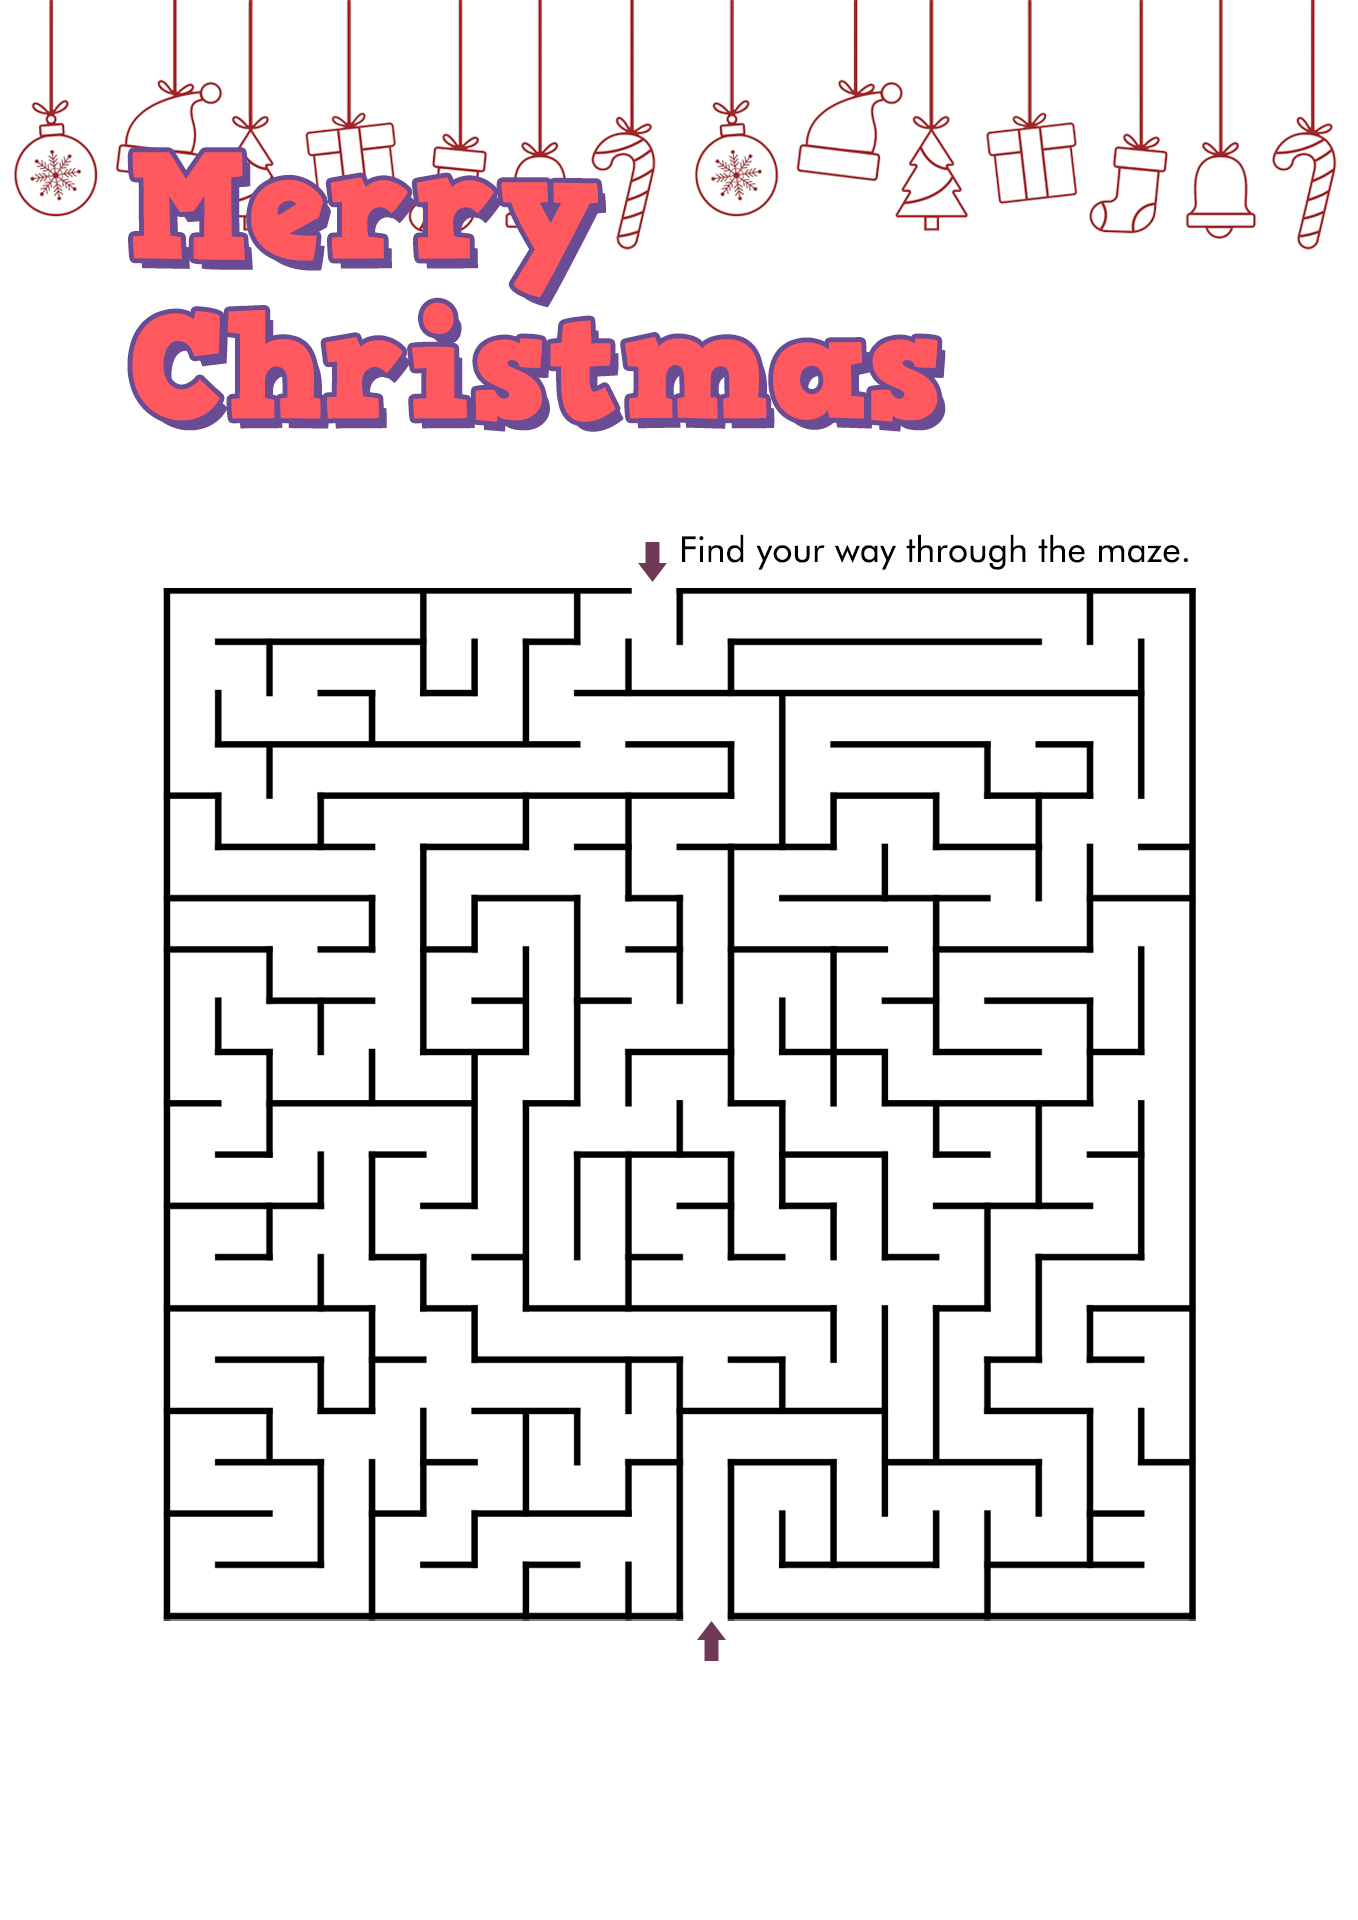 Sunday School Christmas Maze Image